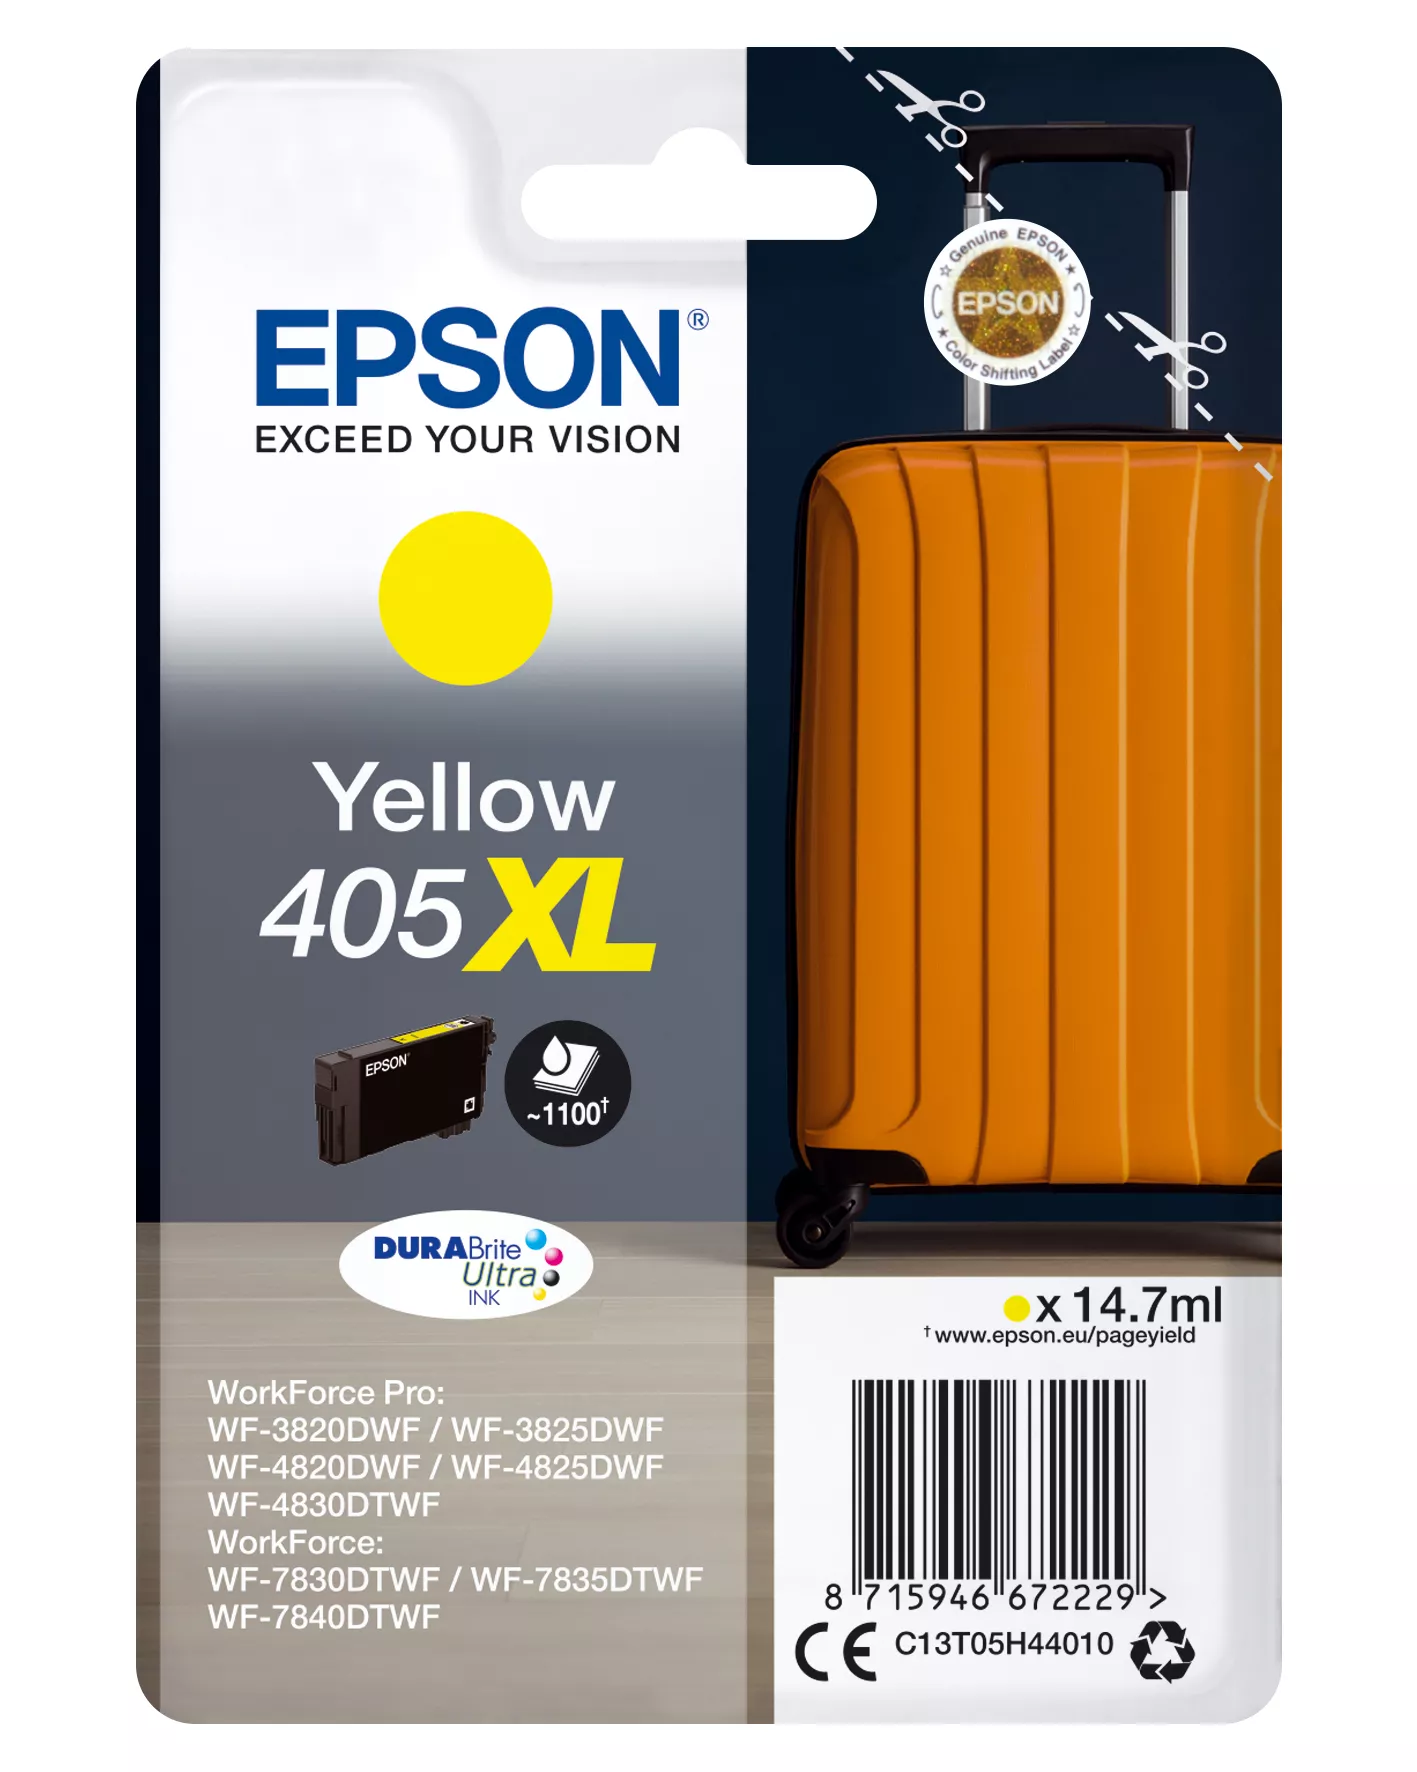 Achat EPSON Singlepack Yellow 405XL DURABrite Ultra Ink - 8715946672229